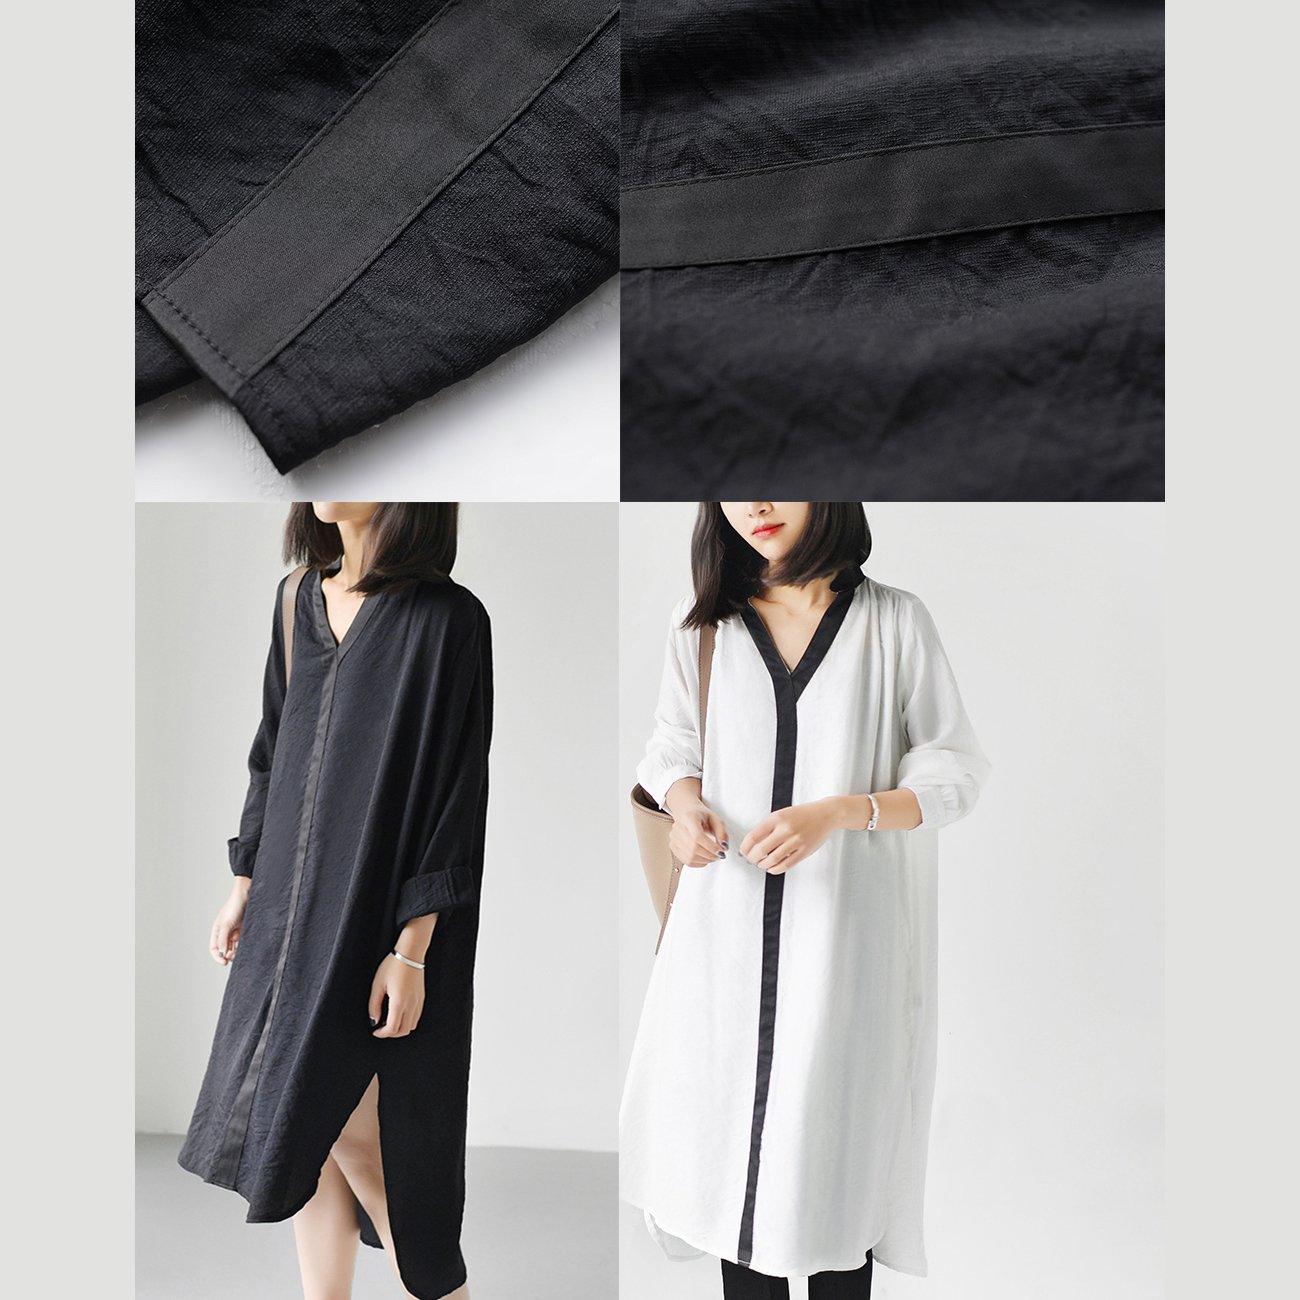 black causal flowy summer dress long sleeve shift dresses oversize clothing - Omychic